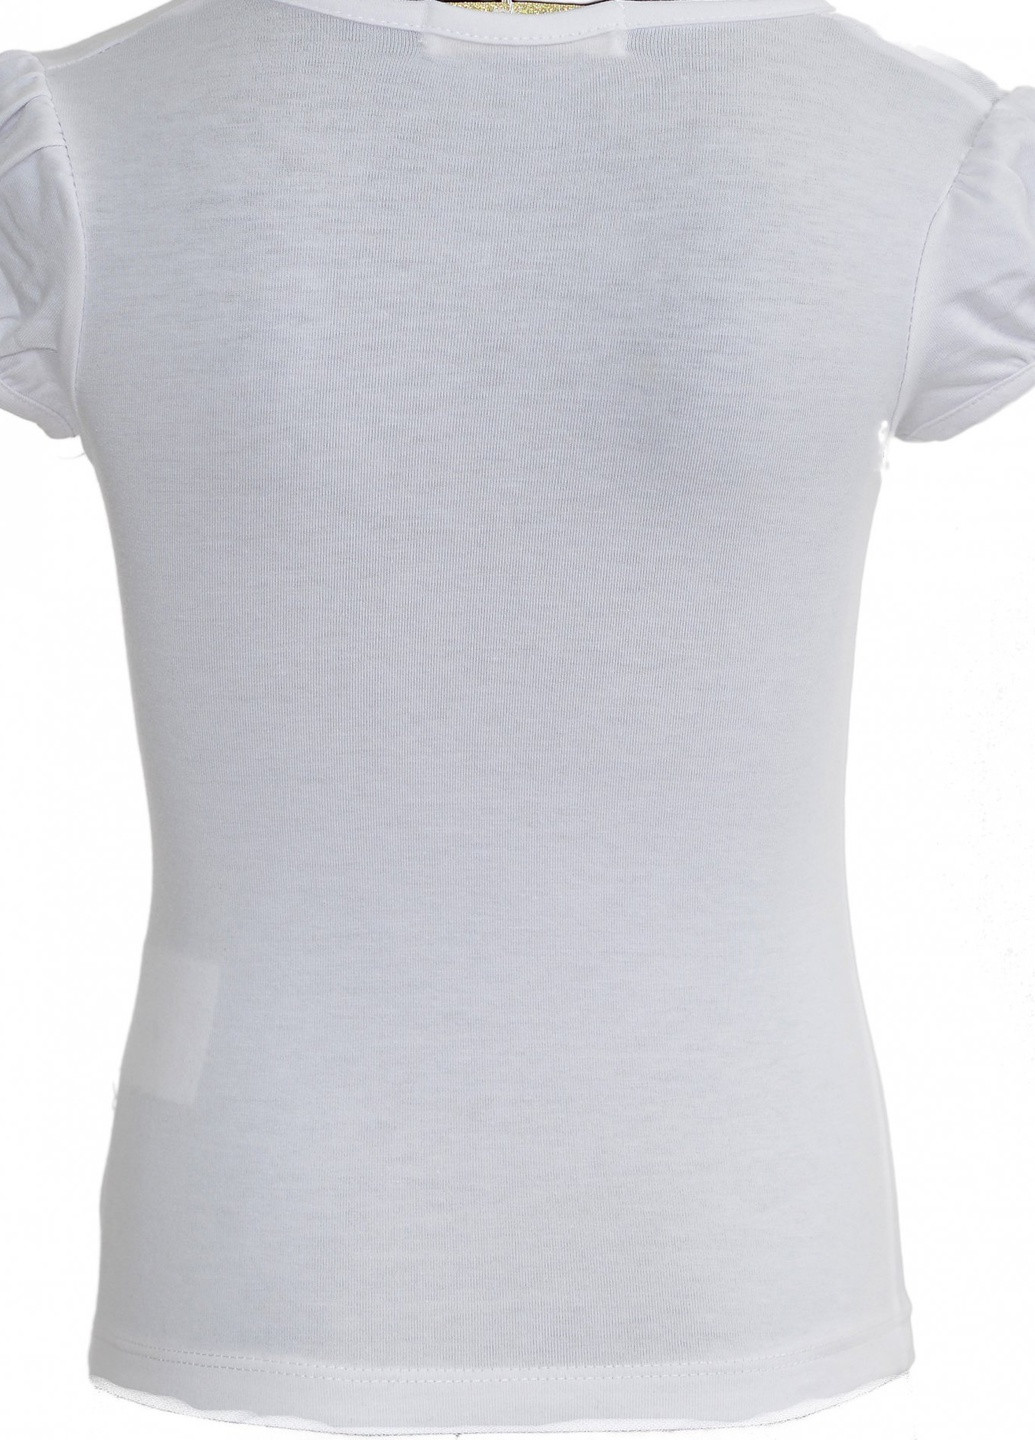 Біла футболки футболка на дівчаток (104)11881-736 Lemanta